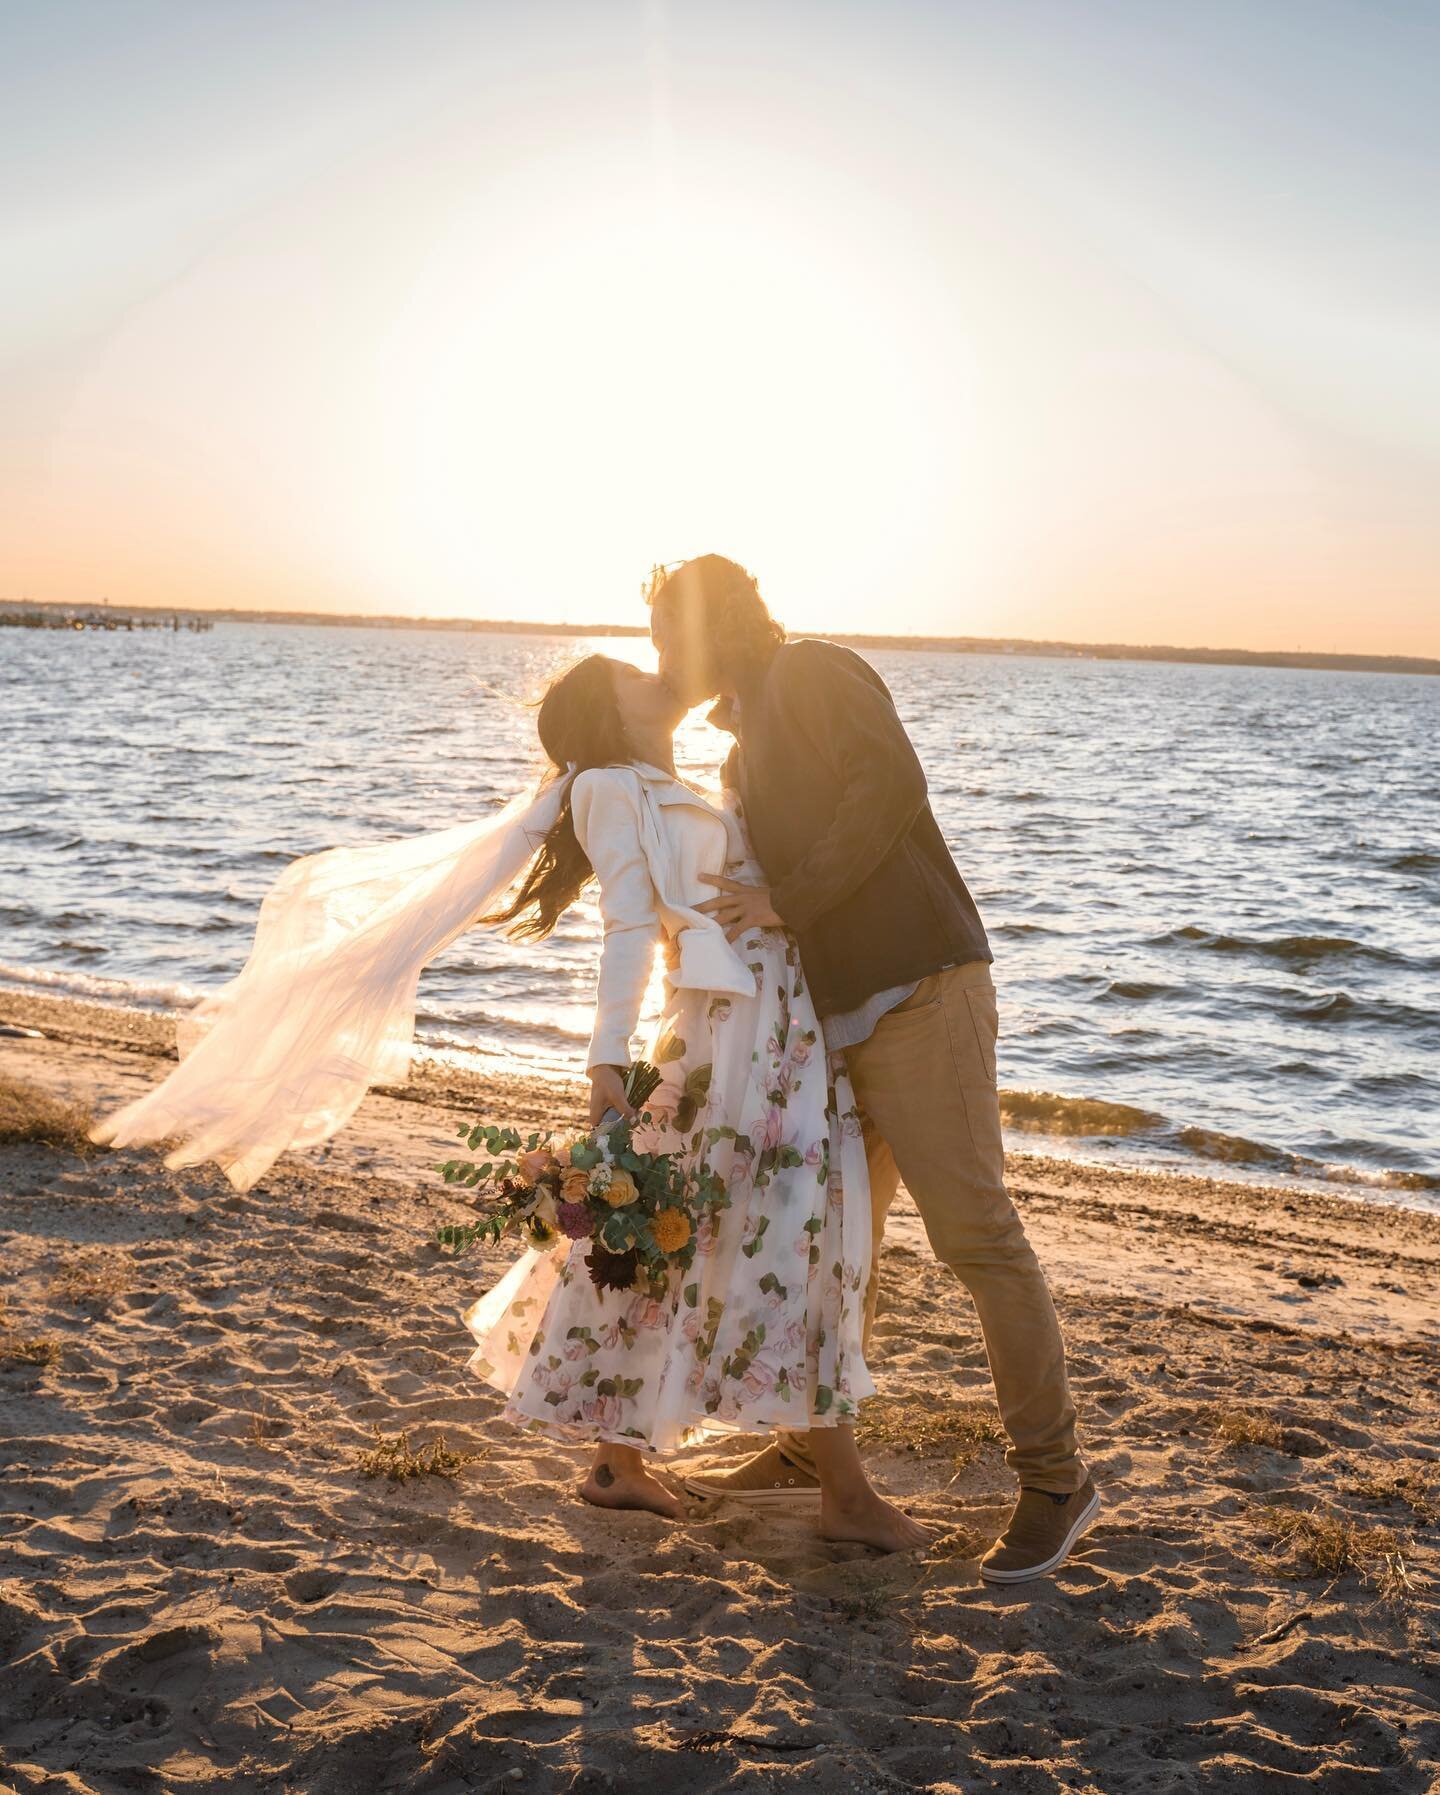 Reminiscing on a beautiful sunset with a beautiful couple 🌅 #beachvibes #weddingphotography #beachwedding #newjerseybeaches #goldenhourphotography  #scenicnj #tietheknot